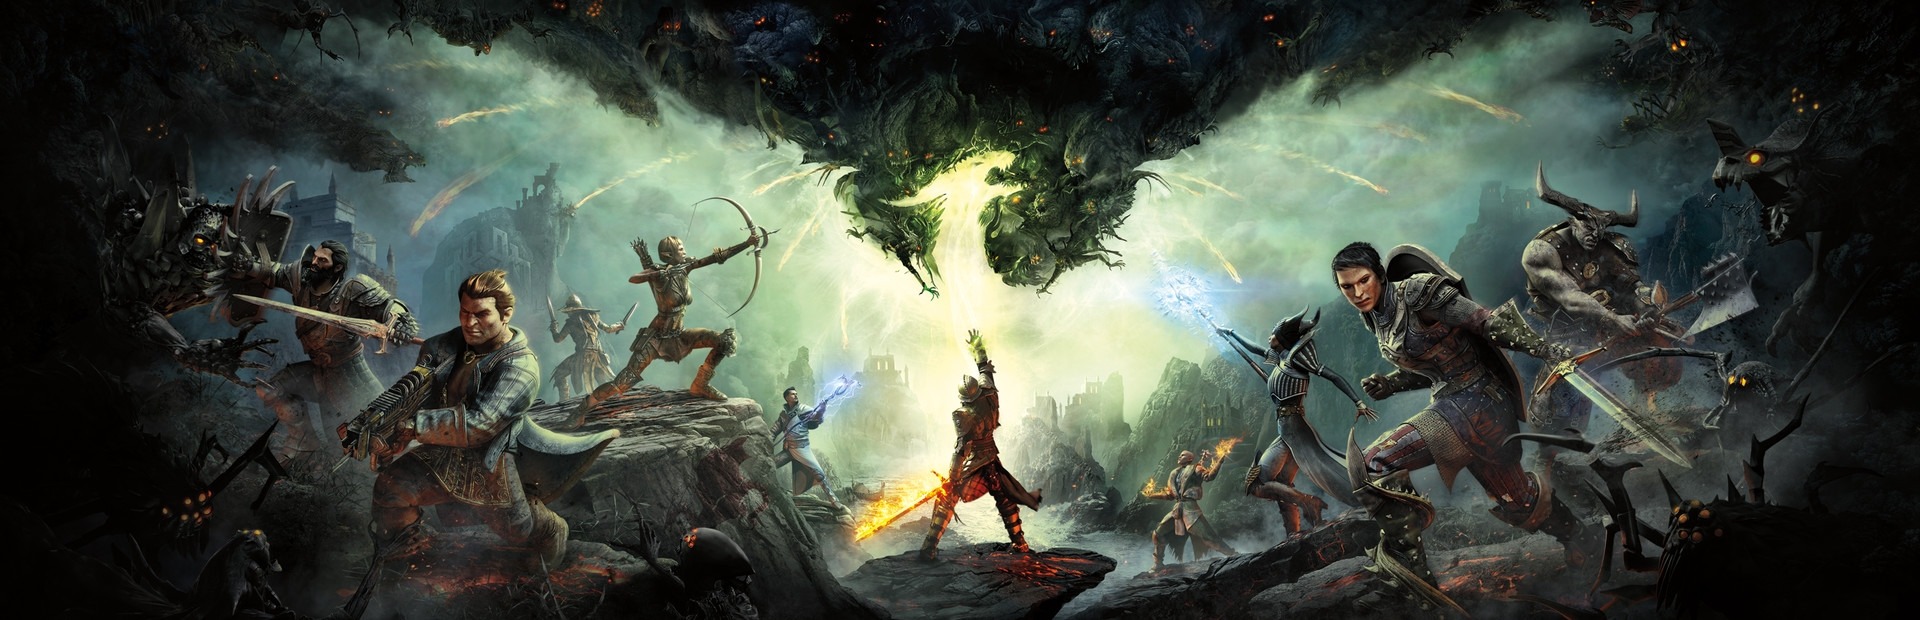 Banner Dragon Age: Inquisition: The Descent